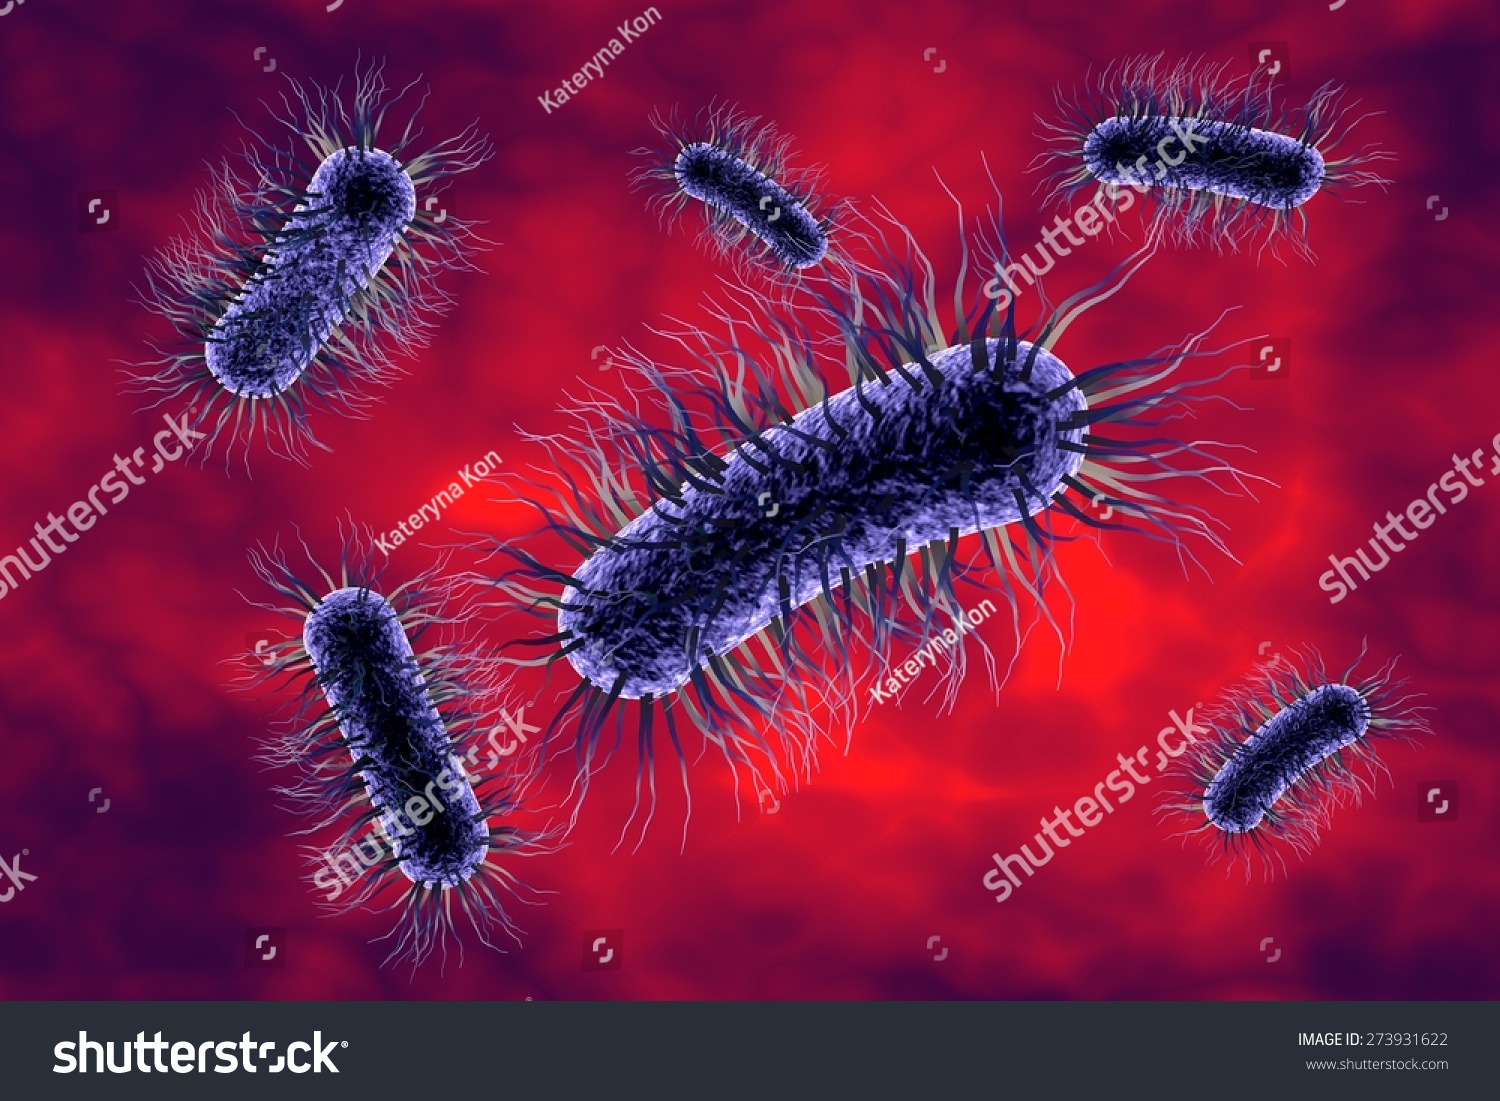 Three Dimensional Drawing Of Escherichia Coli Model Of Bacteria Realistic Illustration Of